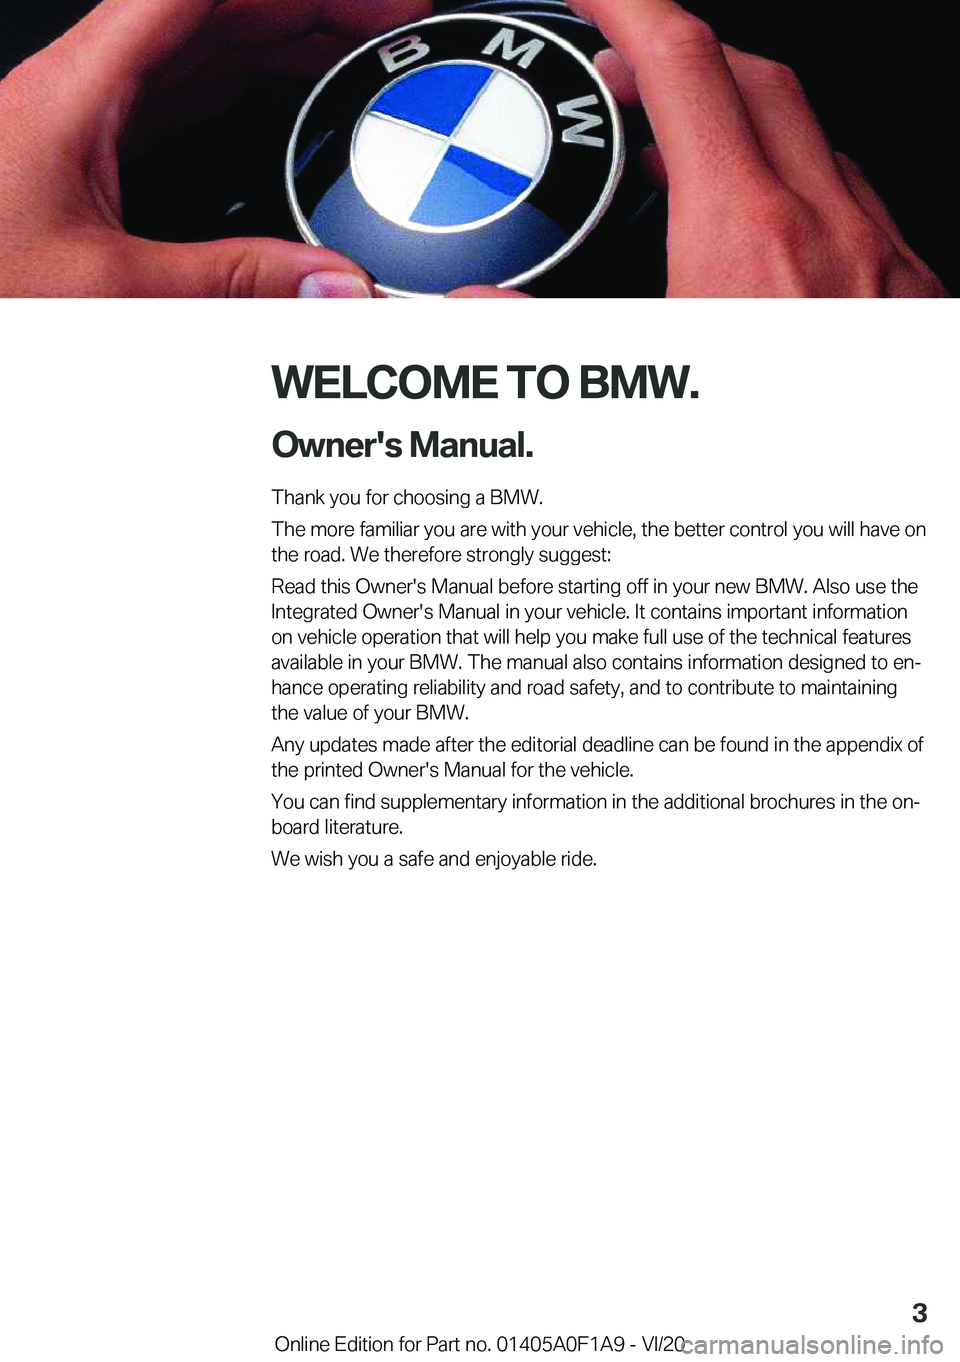 BMW 2 SERIES COUPE 2021  Owners Manual �W�E�L�C�O�M�E��T�O��B�M�W�.�O�w�n�e�r�'�s��M�a�n�u�a�l�.
�T�h�a�n�k��y�o�u��f�o�r��c�h�o�o�s�i�n�g��a��B�M�W�.
�T�h�e��m�o�r�e��f�a�m�i�l�i�a�r��y�o�u��a�r�e��w�i�t�h��y�o�u�r��v�e